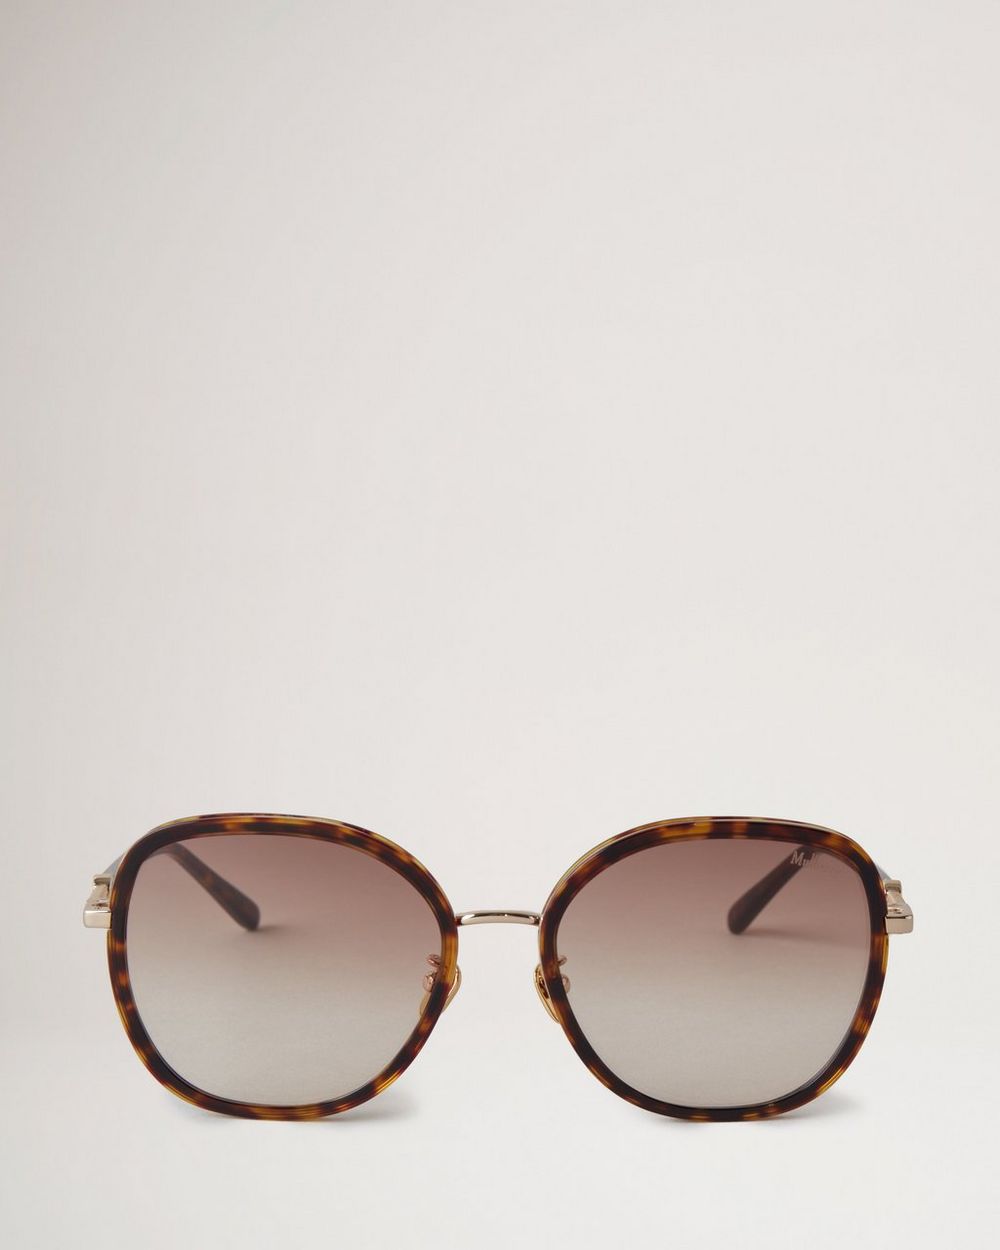 SALE Vintage Aviator Sunglasses Beautiful Condition -  Israel